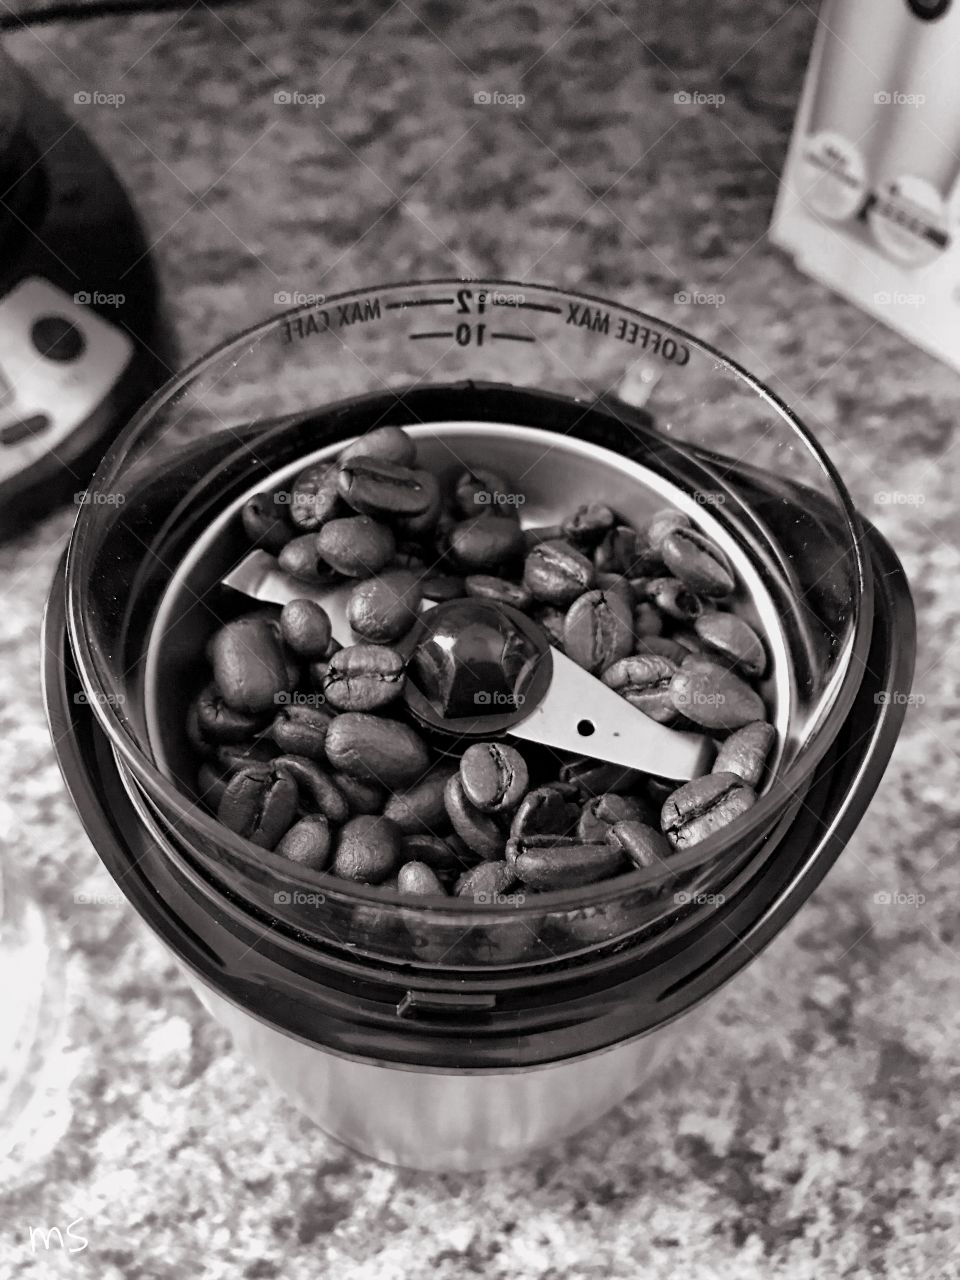 “Café” #CoffeeBeans #BlackandWhite #Strong #Cafecito #GetIt